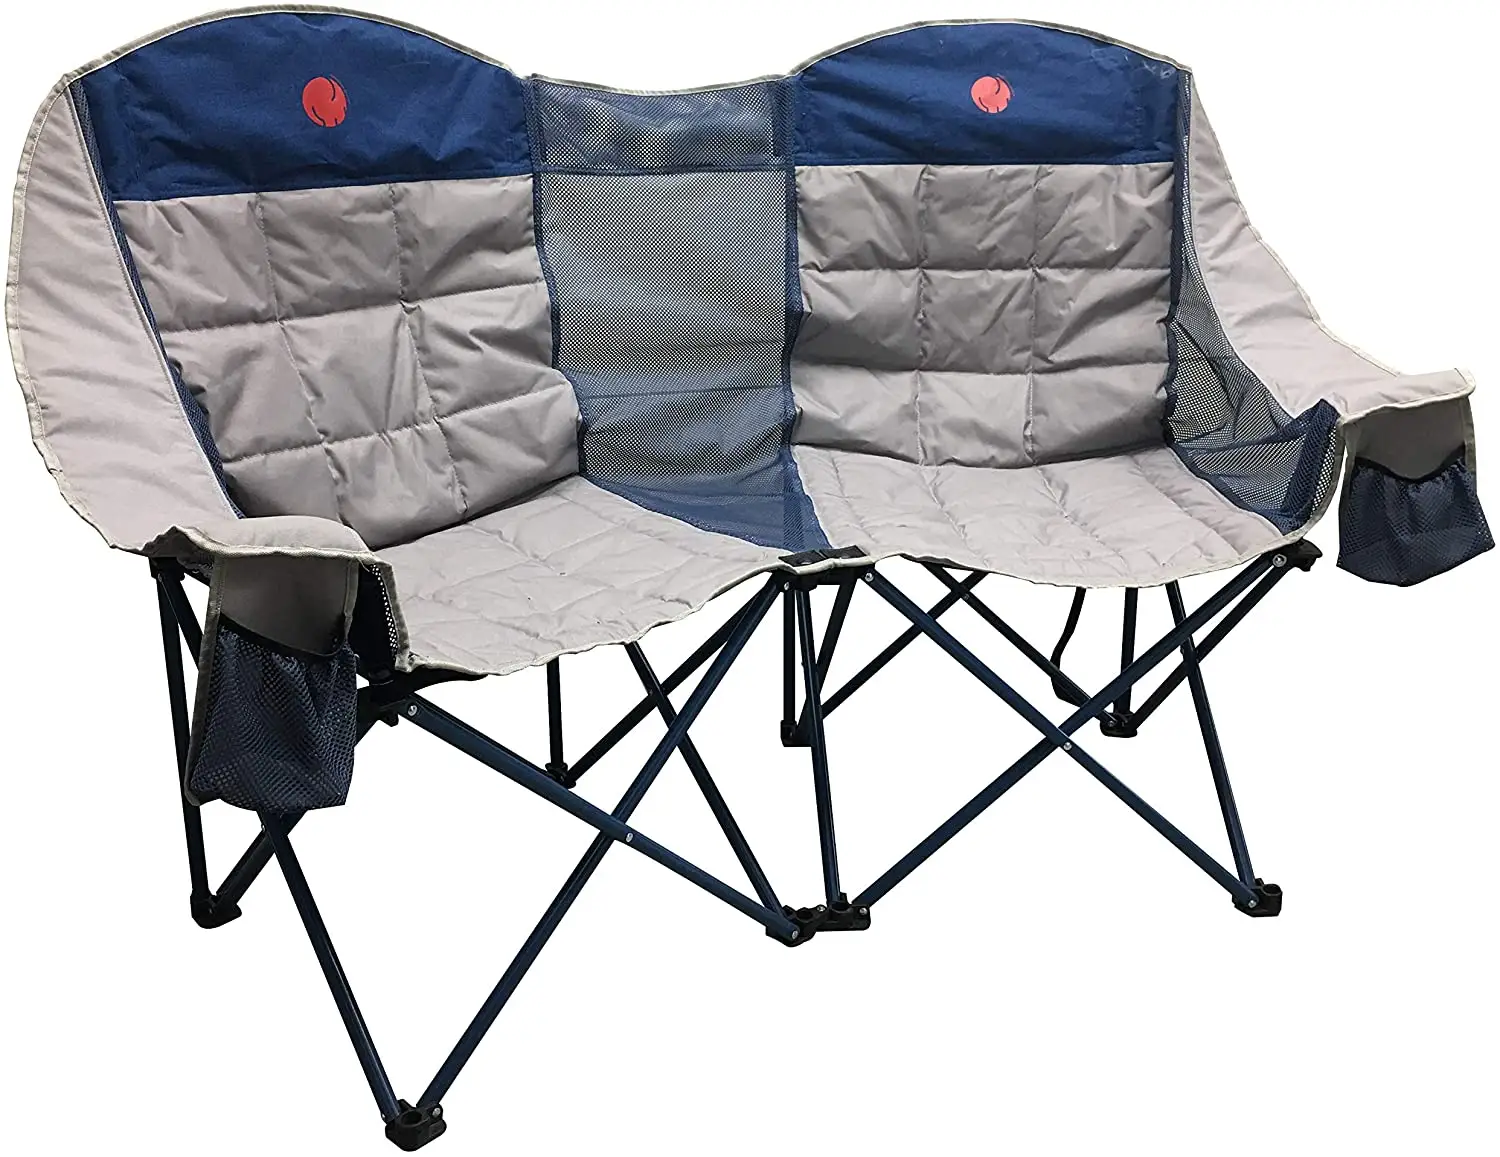 Outdoor 2 Personen Strandkorb Übergroße Klapp Doppel Loves eat Camp Camping Stuhl